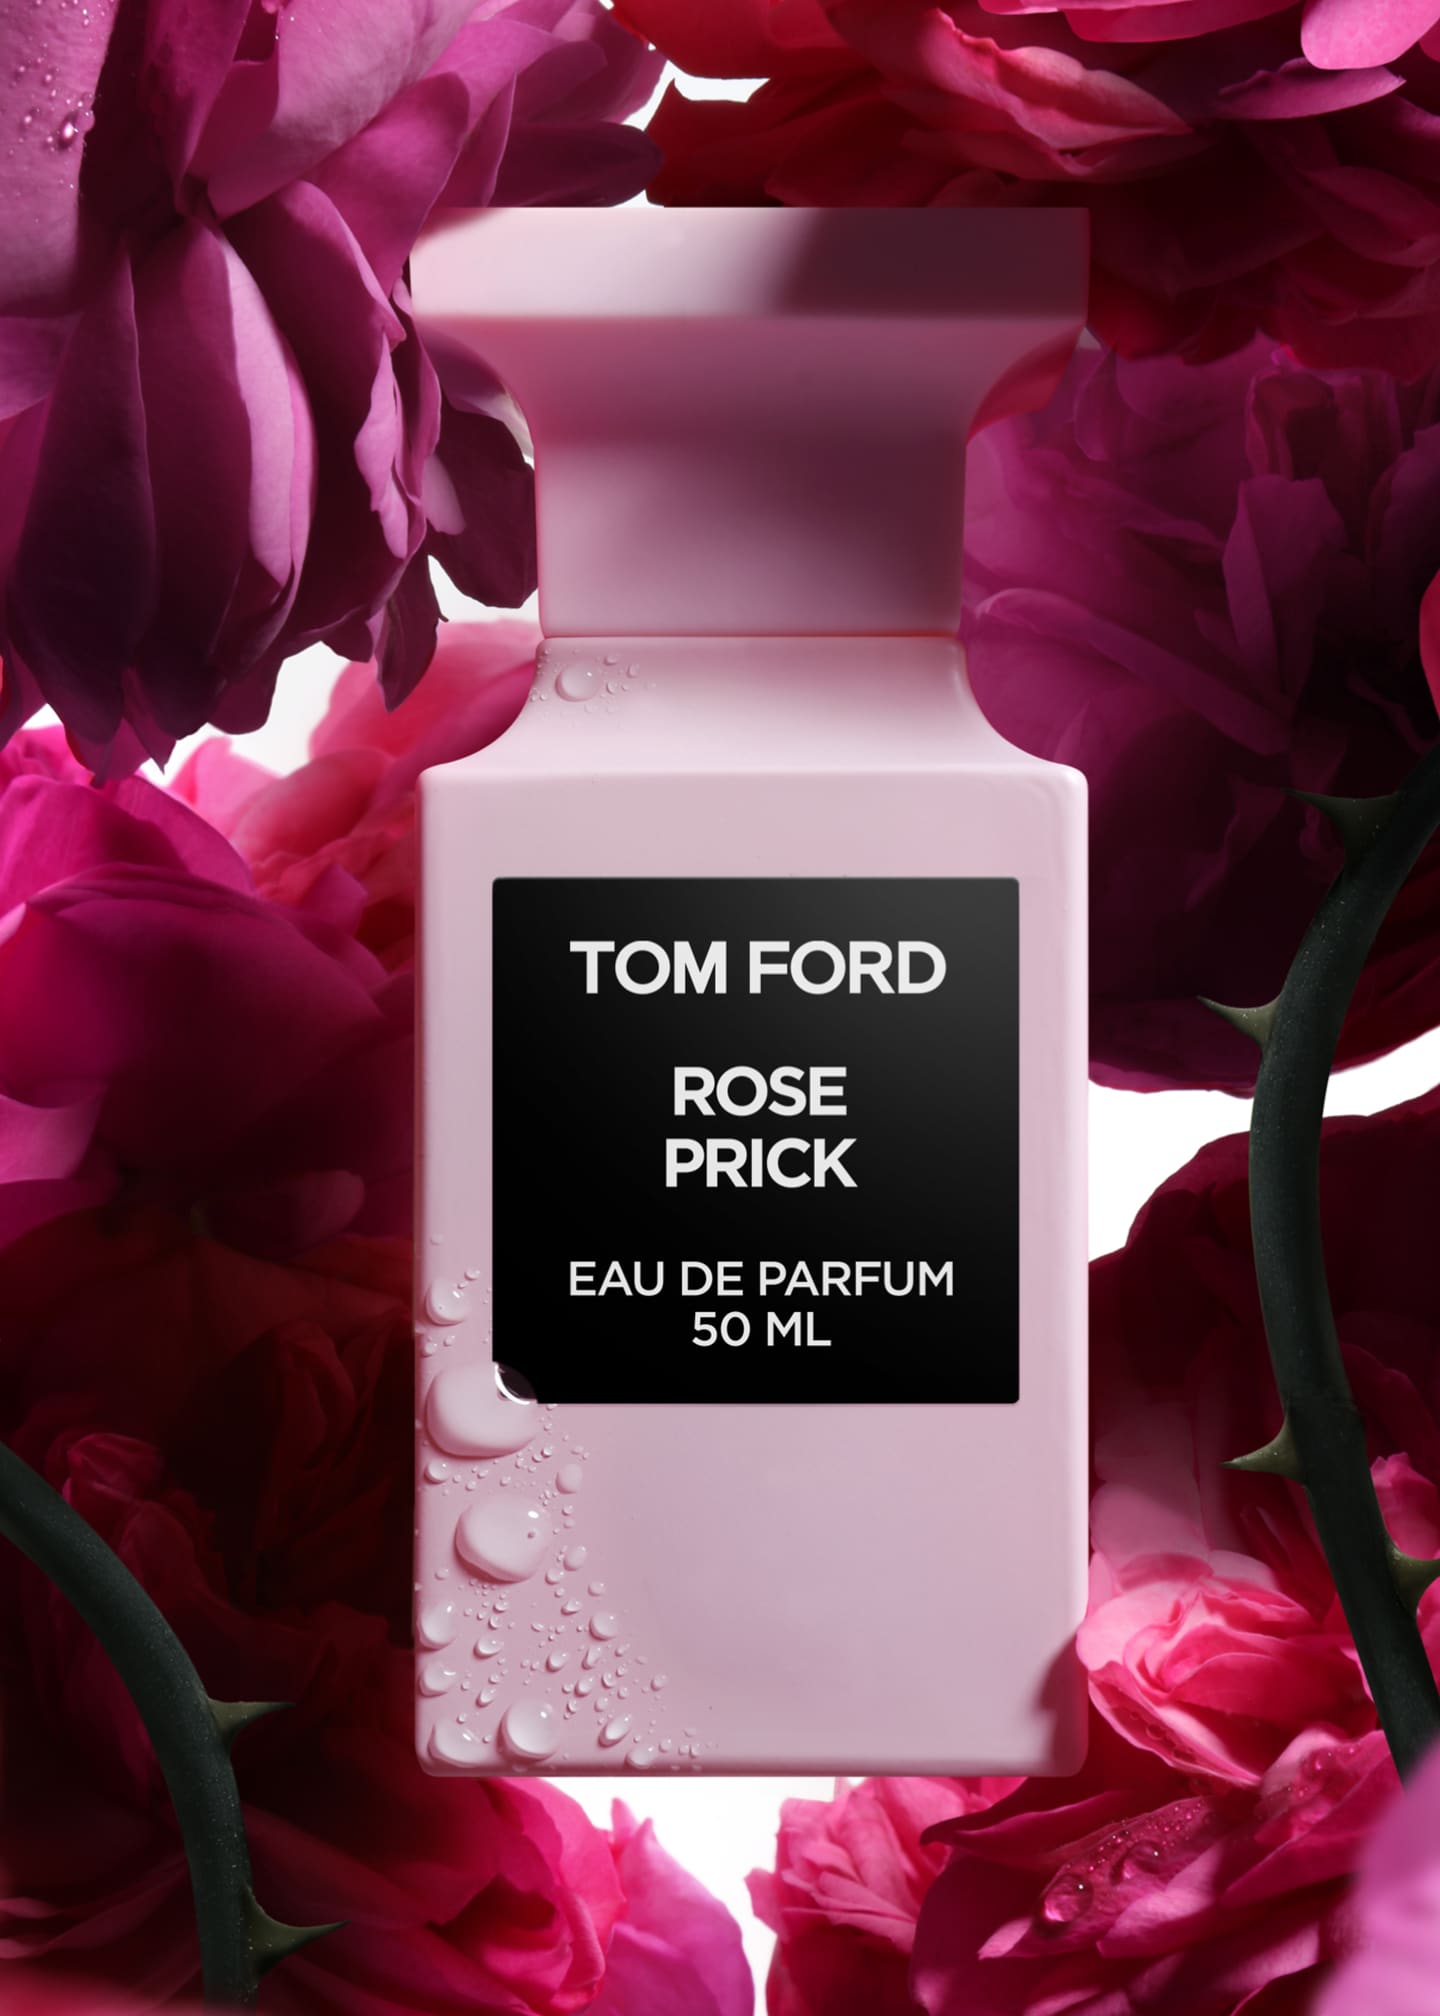 TOM FORD Rose Prick Eau de Parfum Fragrance 250ml Decanter Image 2 of 4